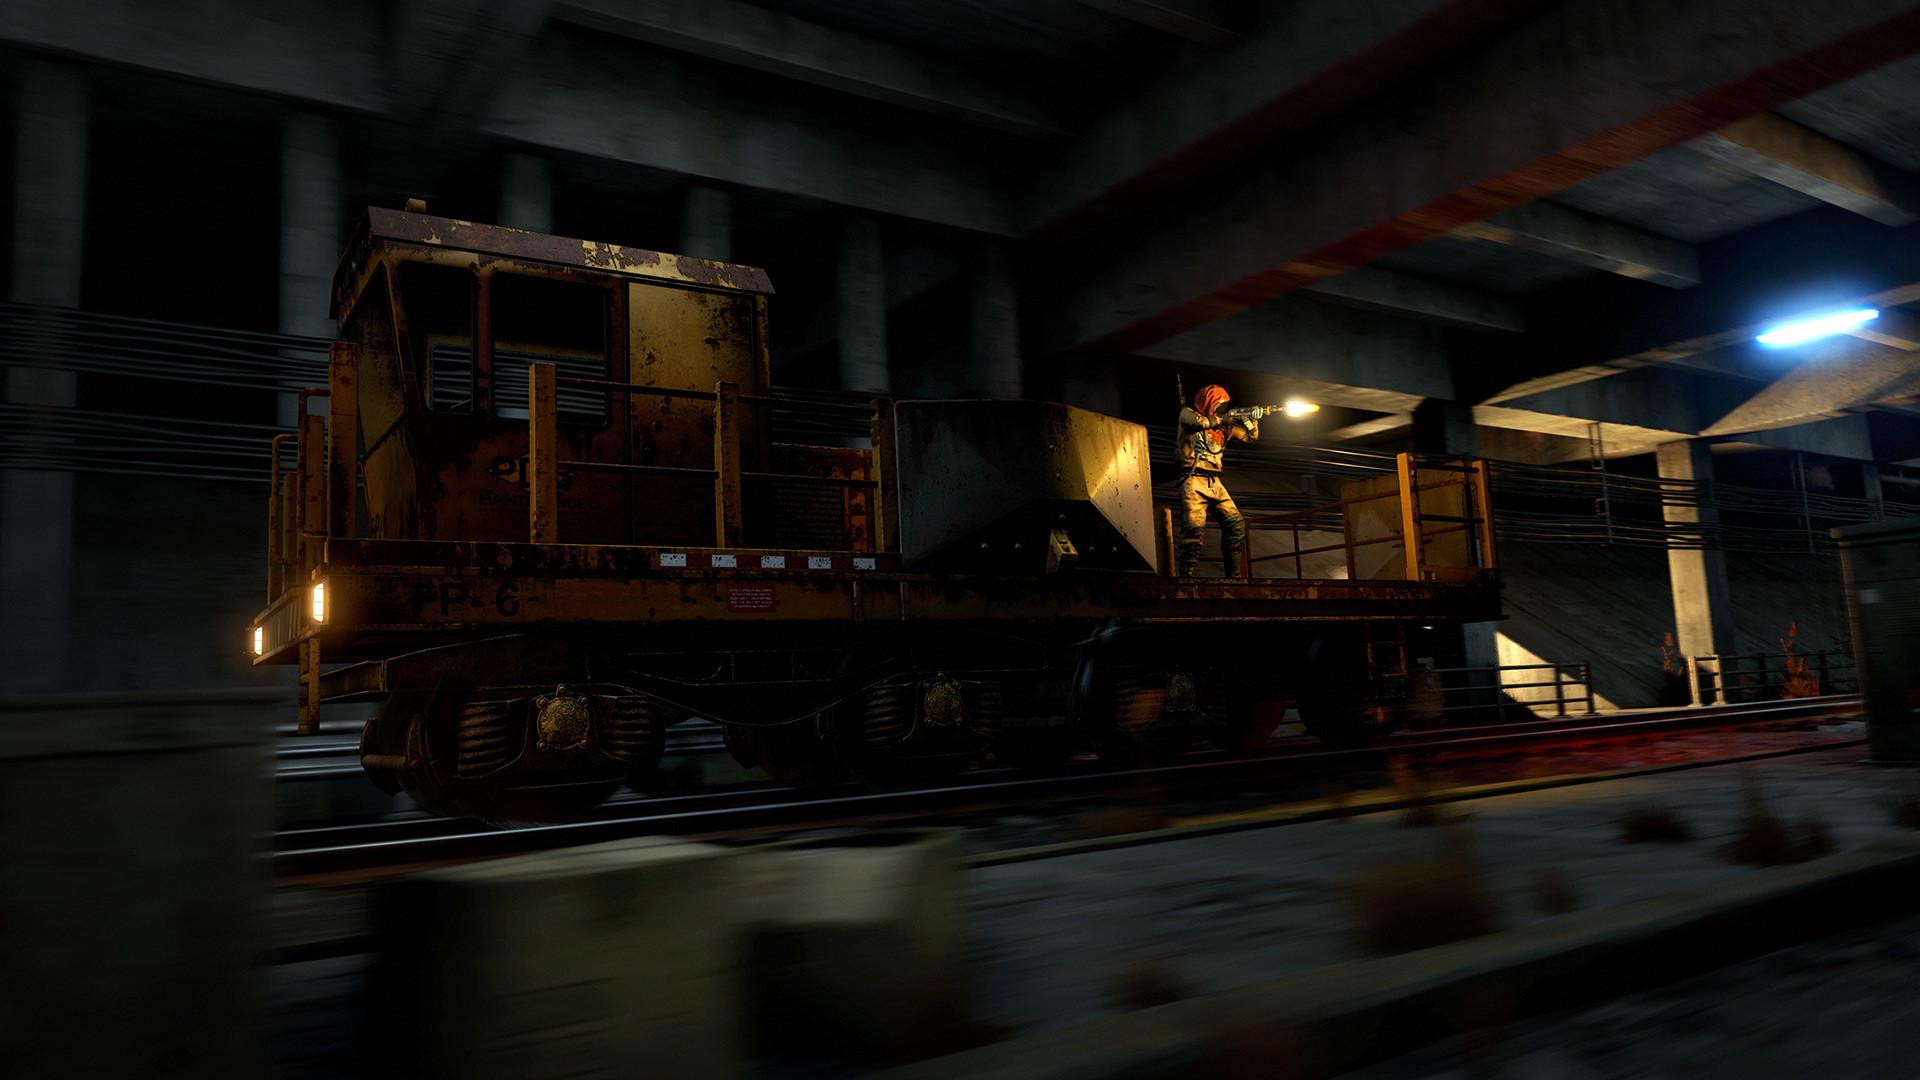 Screenshot №14 from game Rust